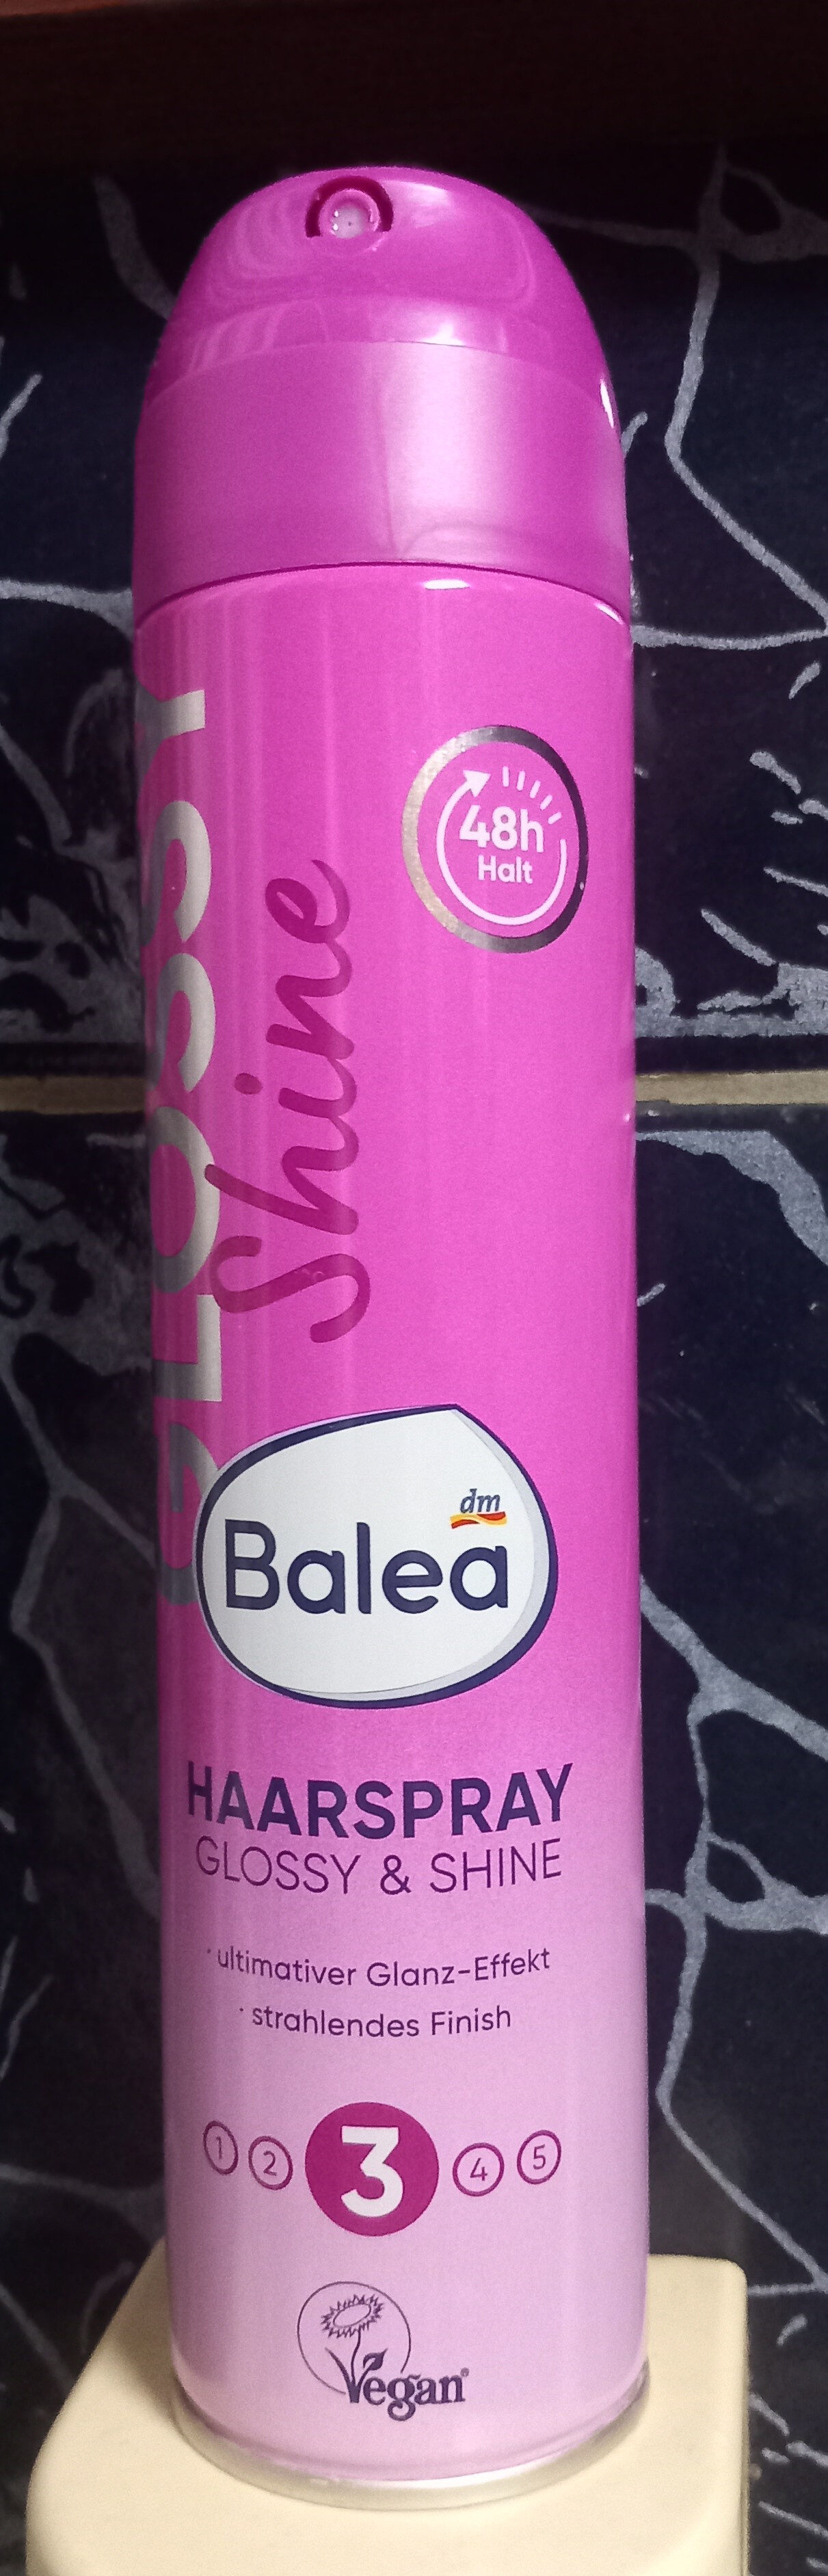 Balea Hairspray Gloss & Shine - Produkt - mk